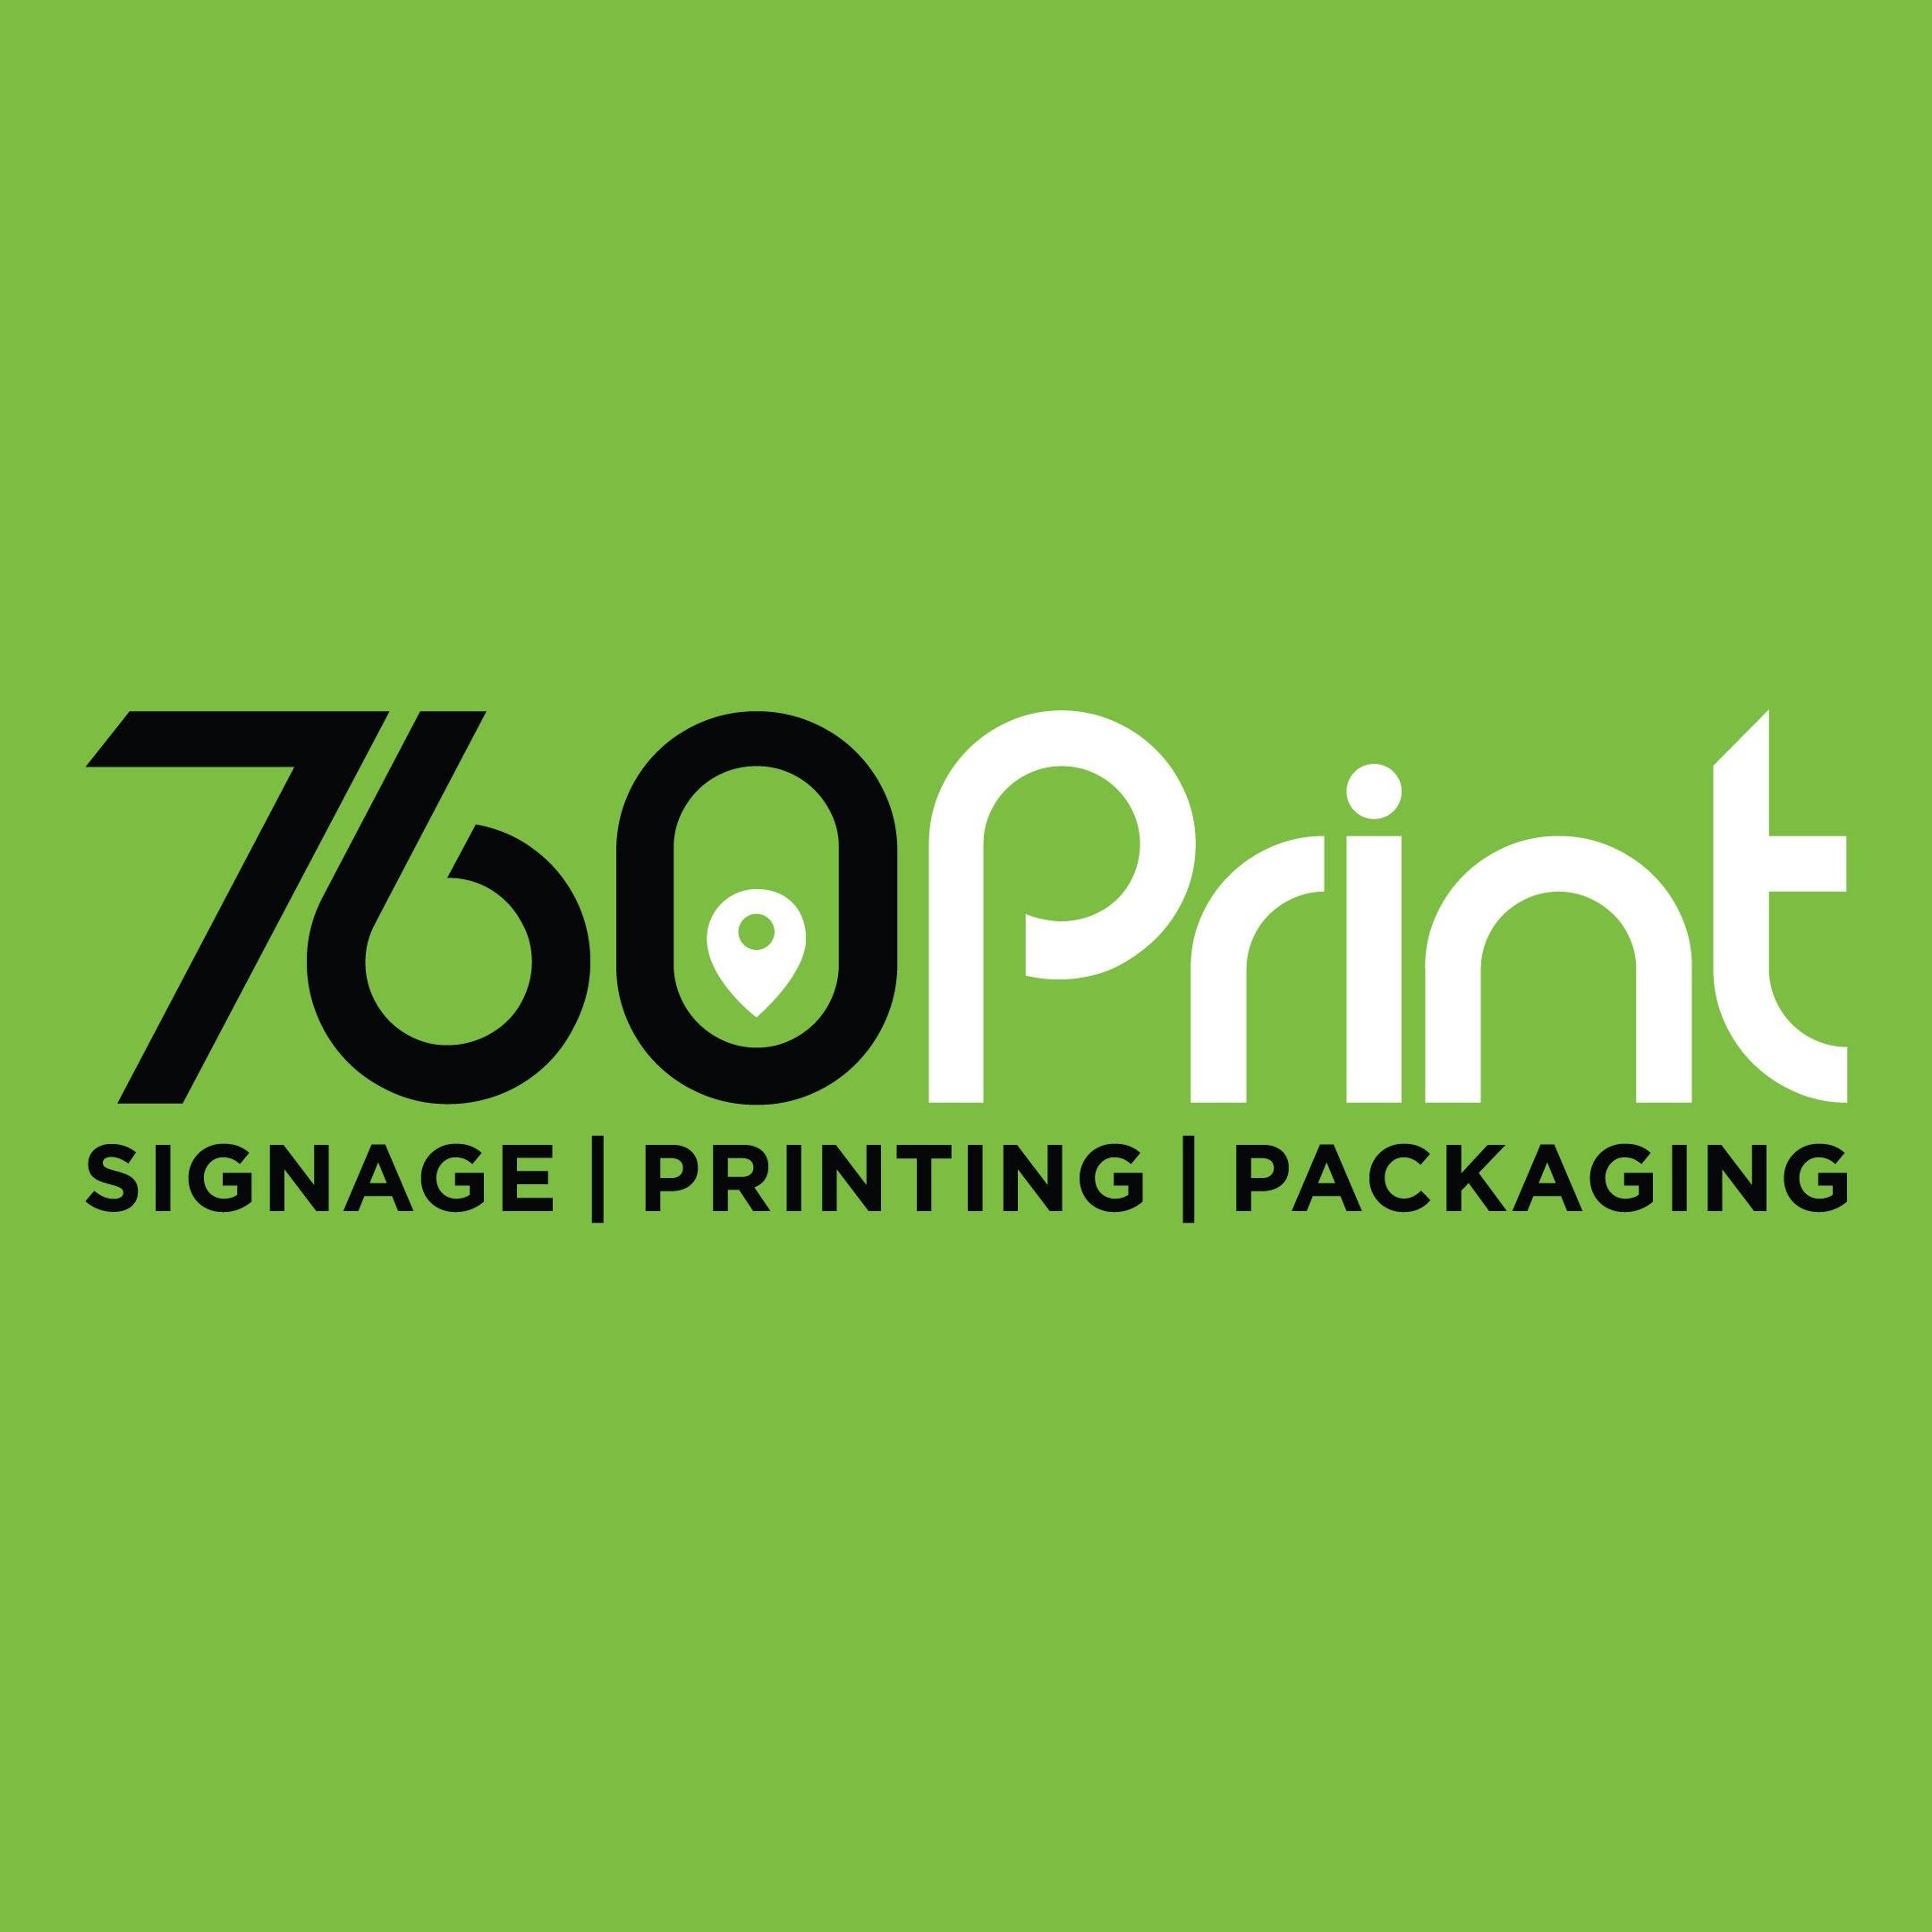 760 Print | Signage, Printing, Packaging - Vista, CA 92081 - (760)758-1140 | ShowMeLocal.com